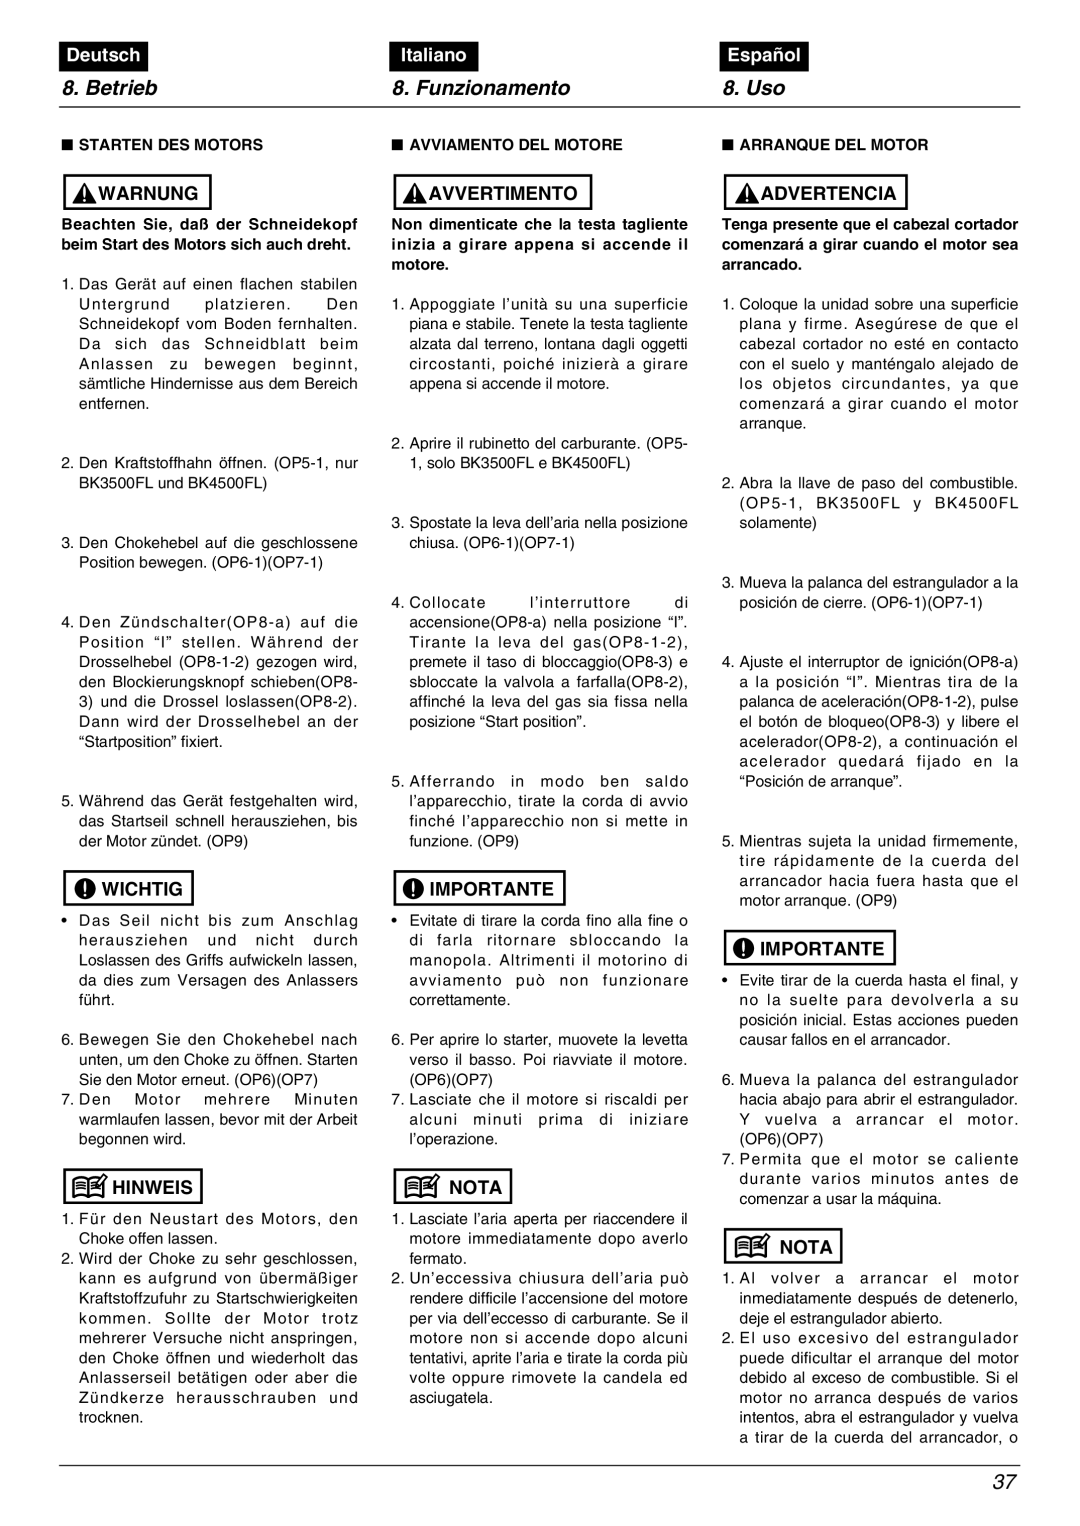 Zenoah BK4500FL manual Deutsch, Italiano, Español, Warnung, Avvertimento, Advertencia, Wichtig, Importante, Hinweis, Nota 